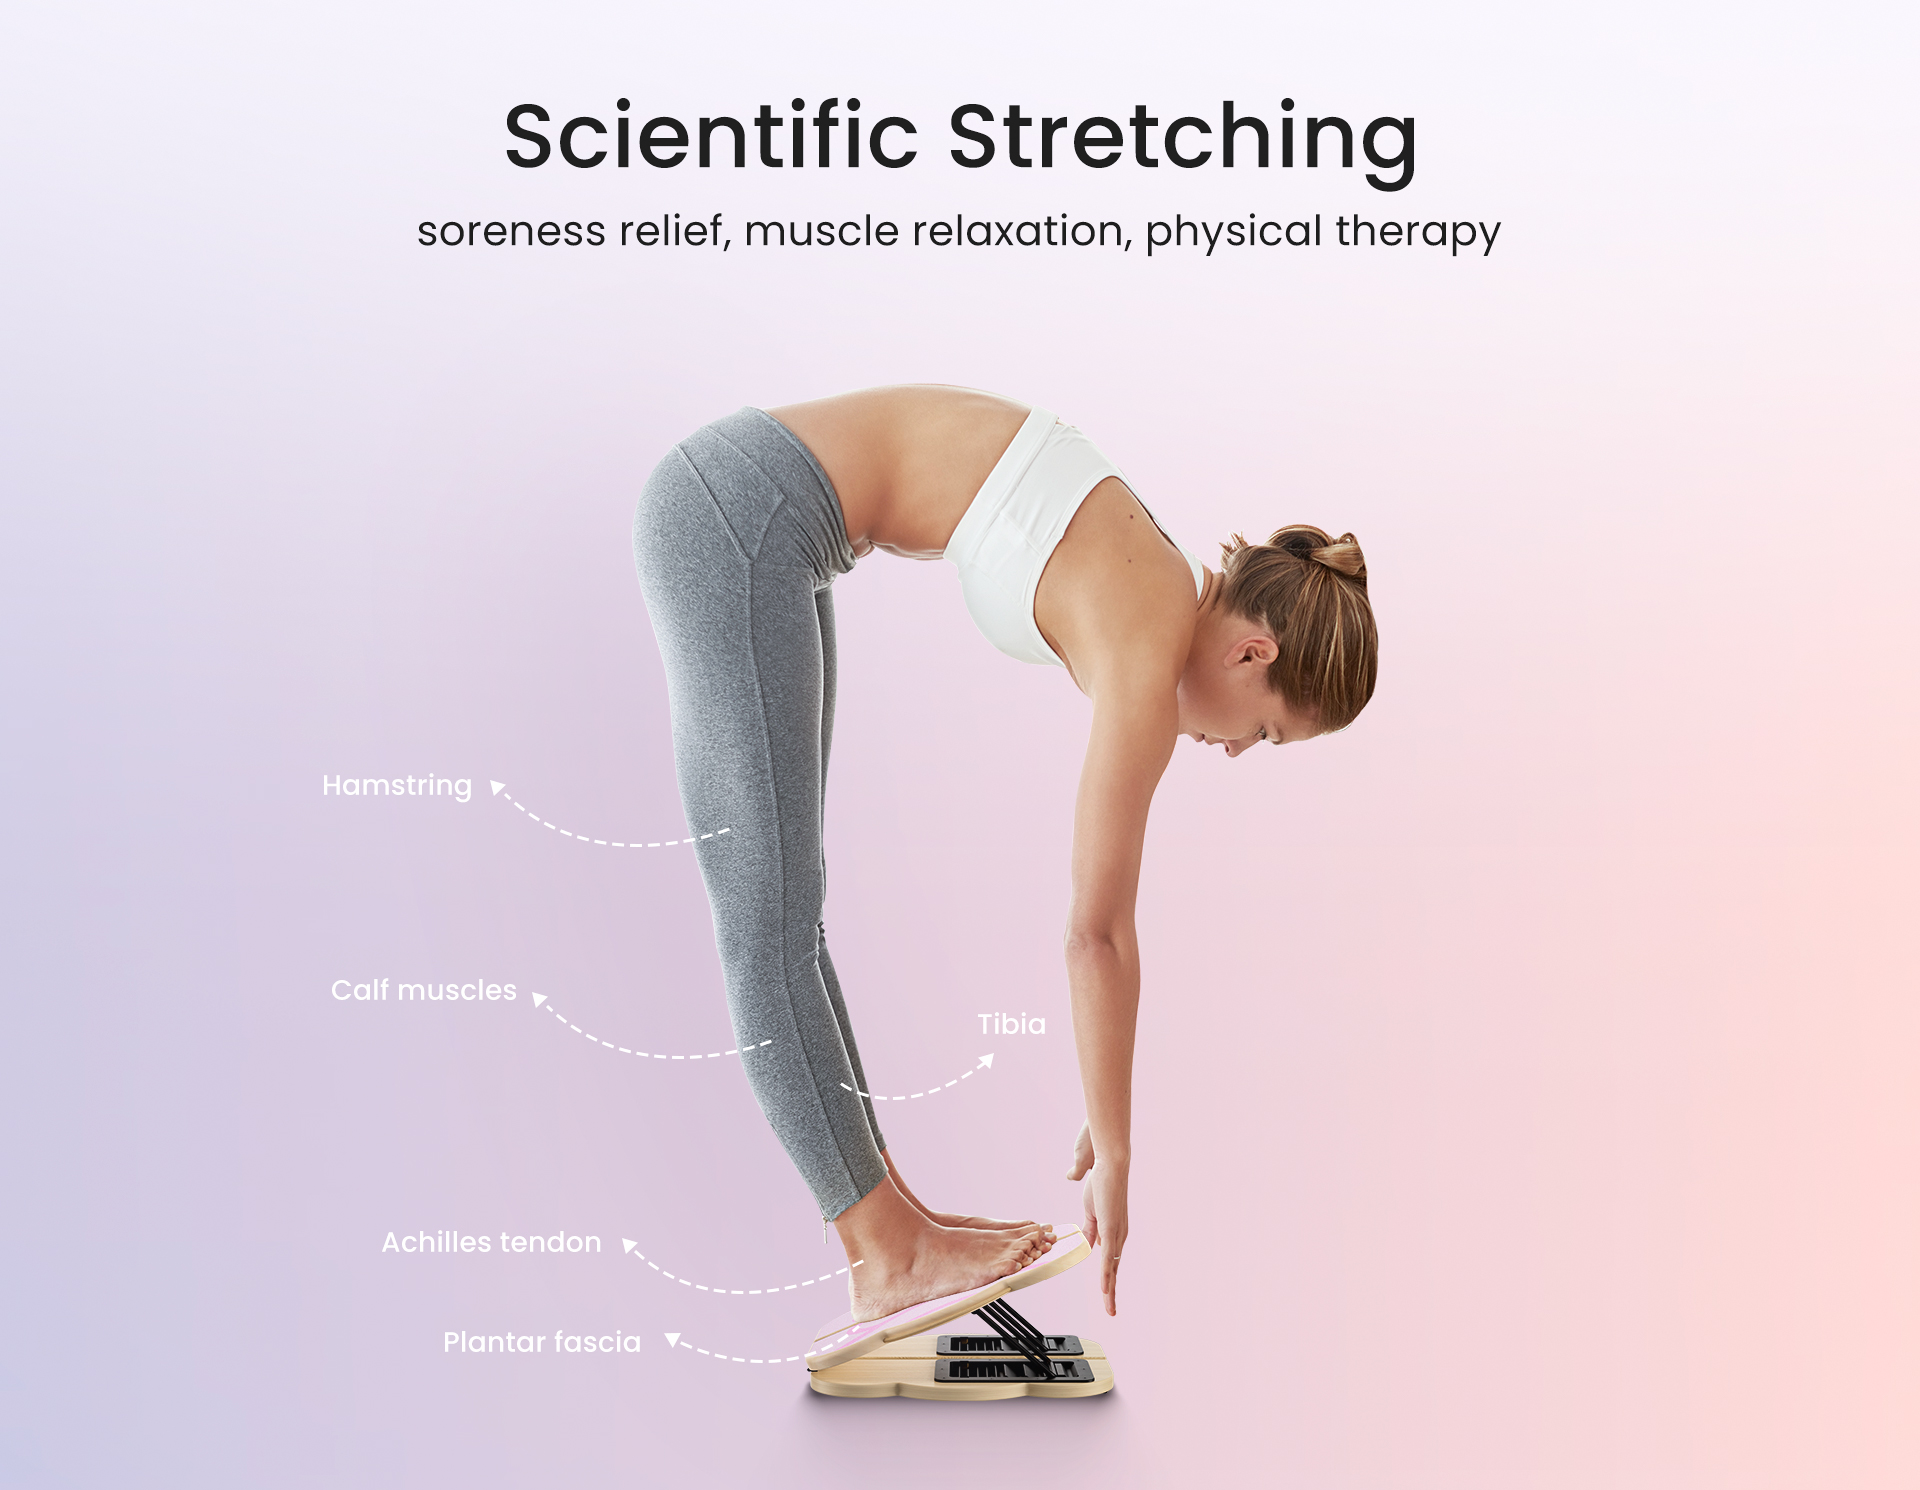 Scientific stretching